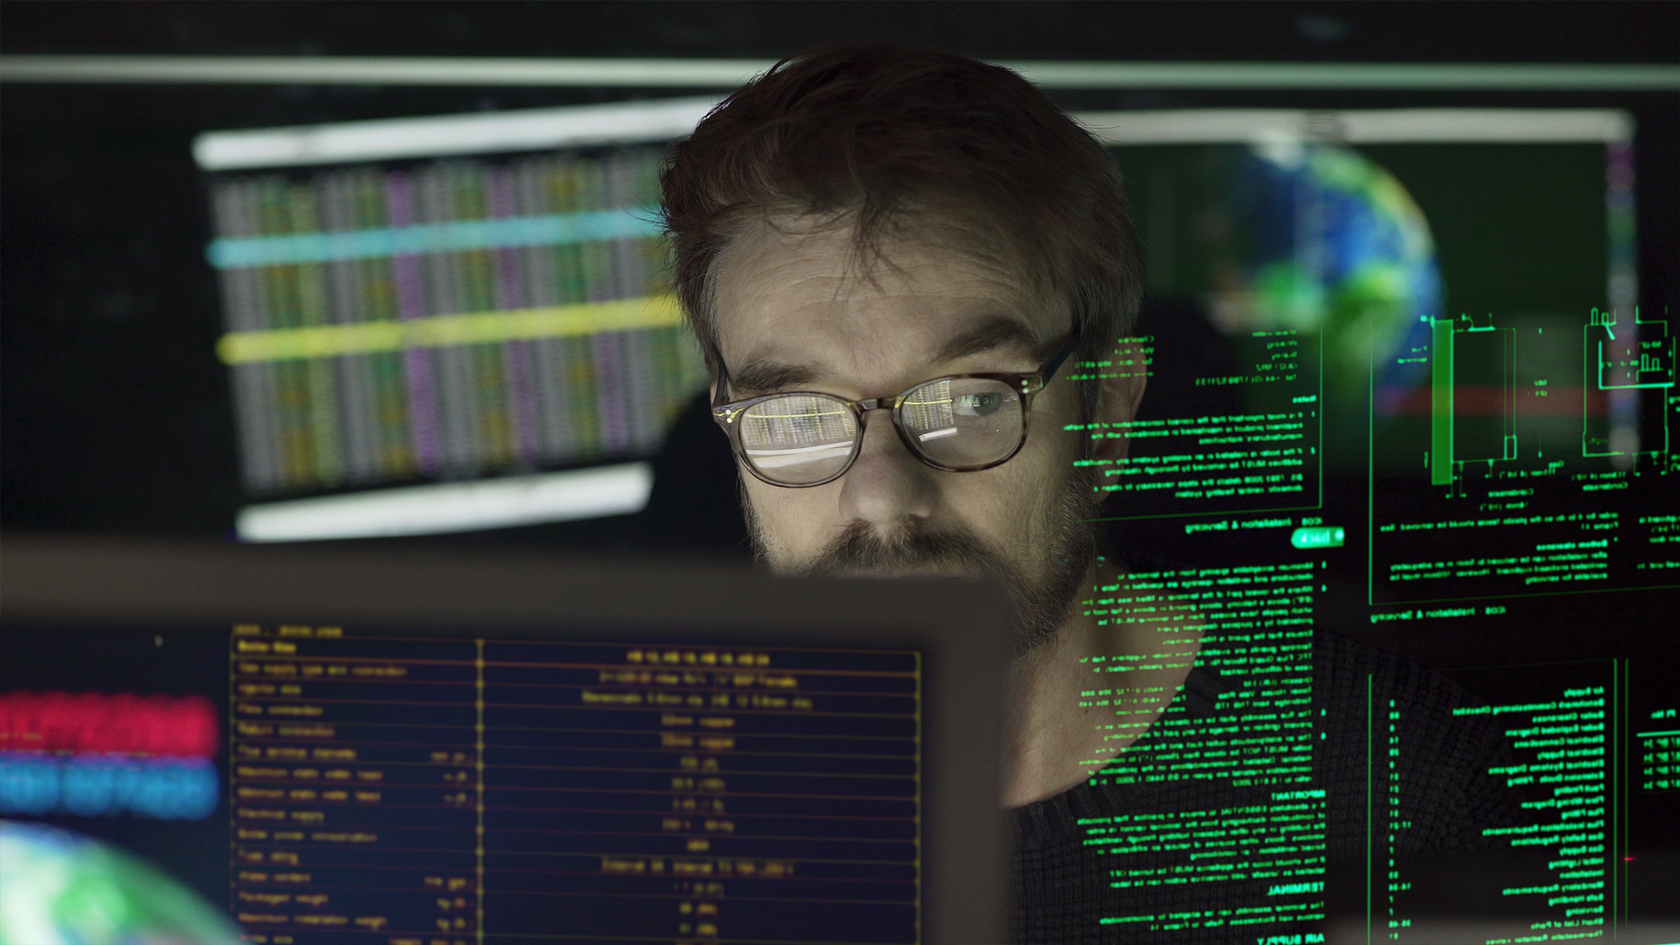 Man looking a various computer screens full of code.